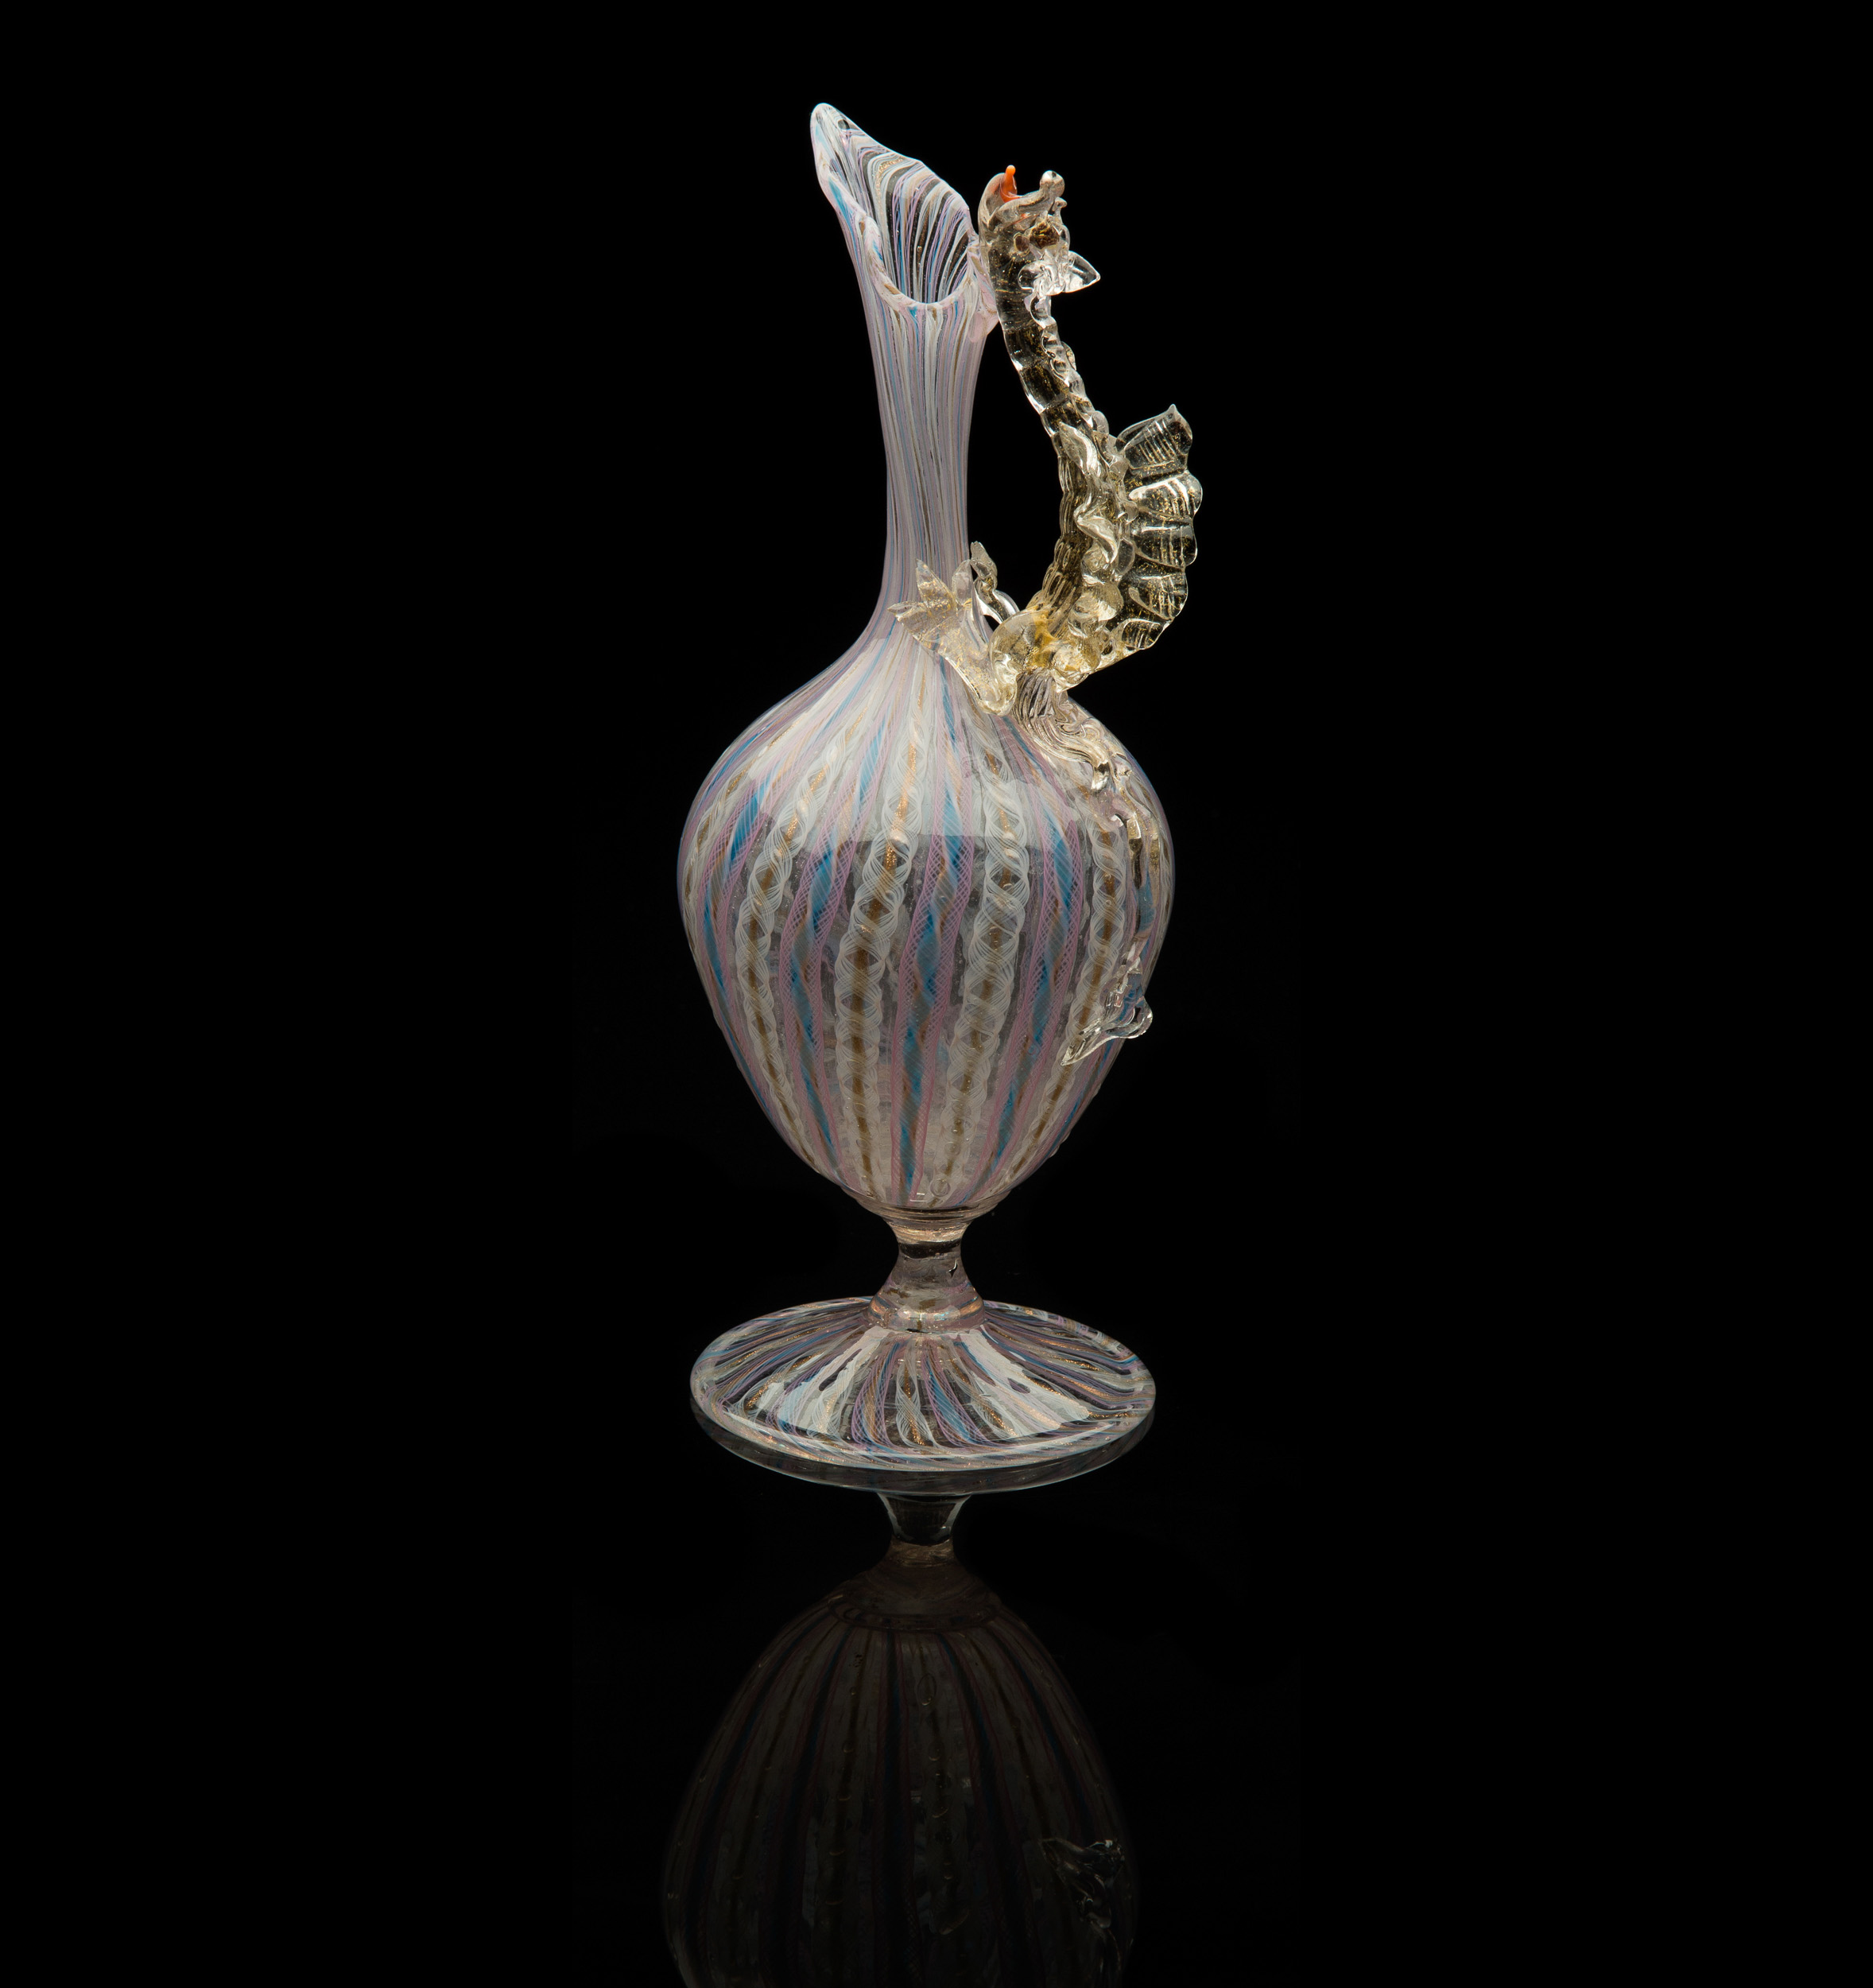  Salviati and Company,&nbsp; Dragon Handle Ewer&nbsp; (circa 1885, glass, 9 1/4 inches), VV.577 